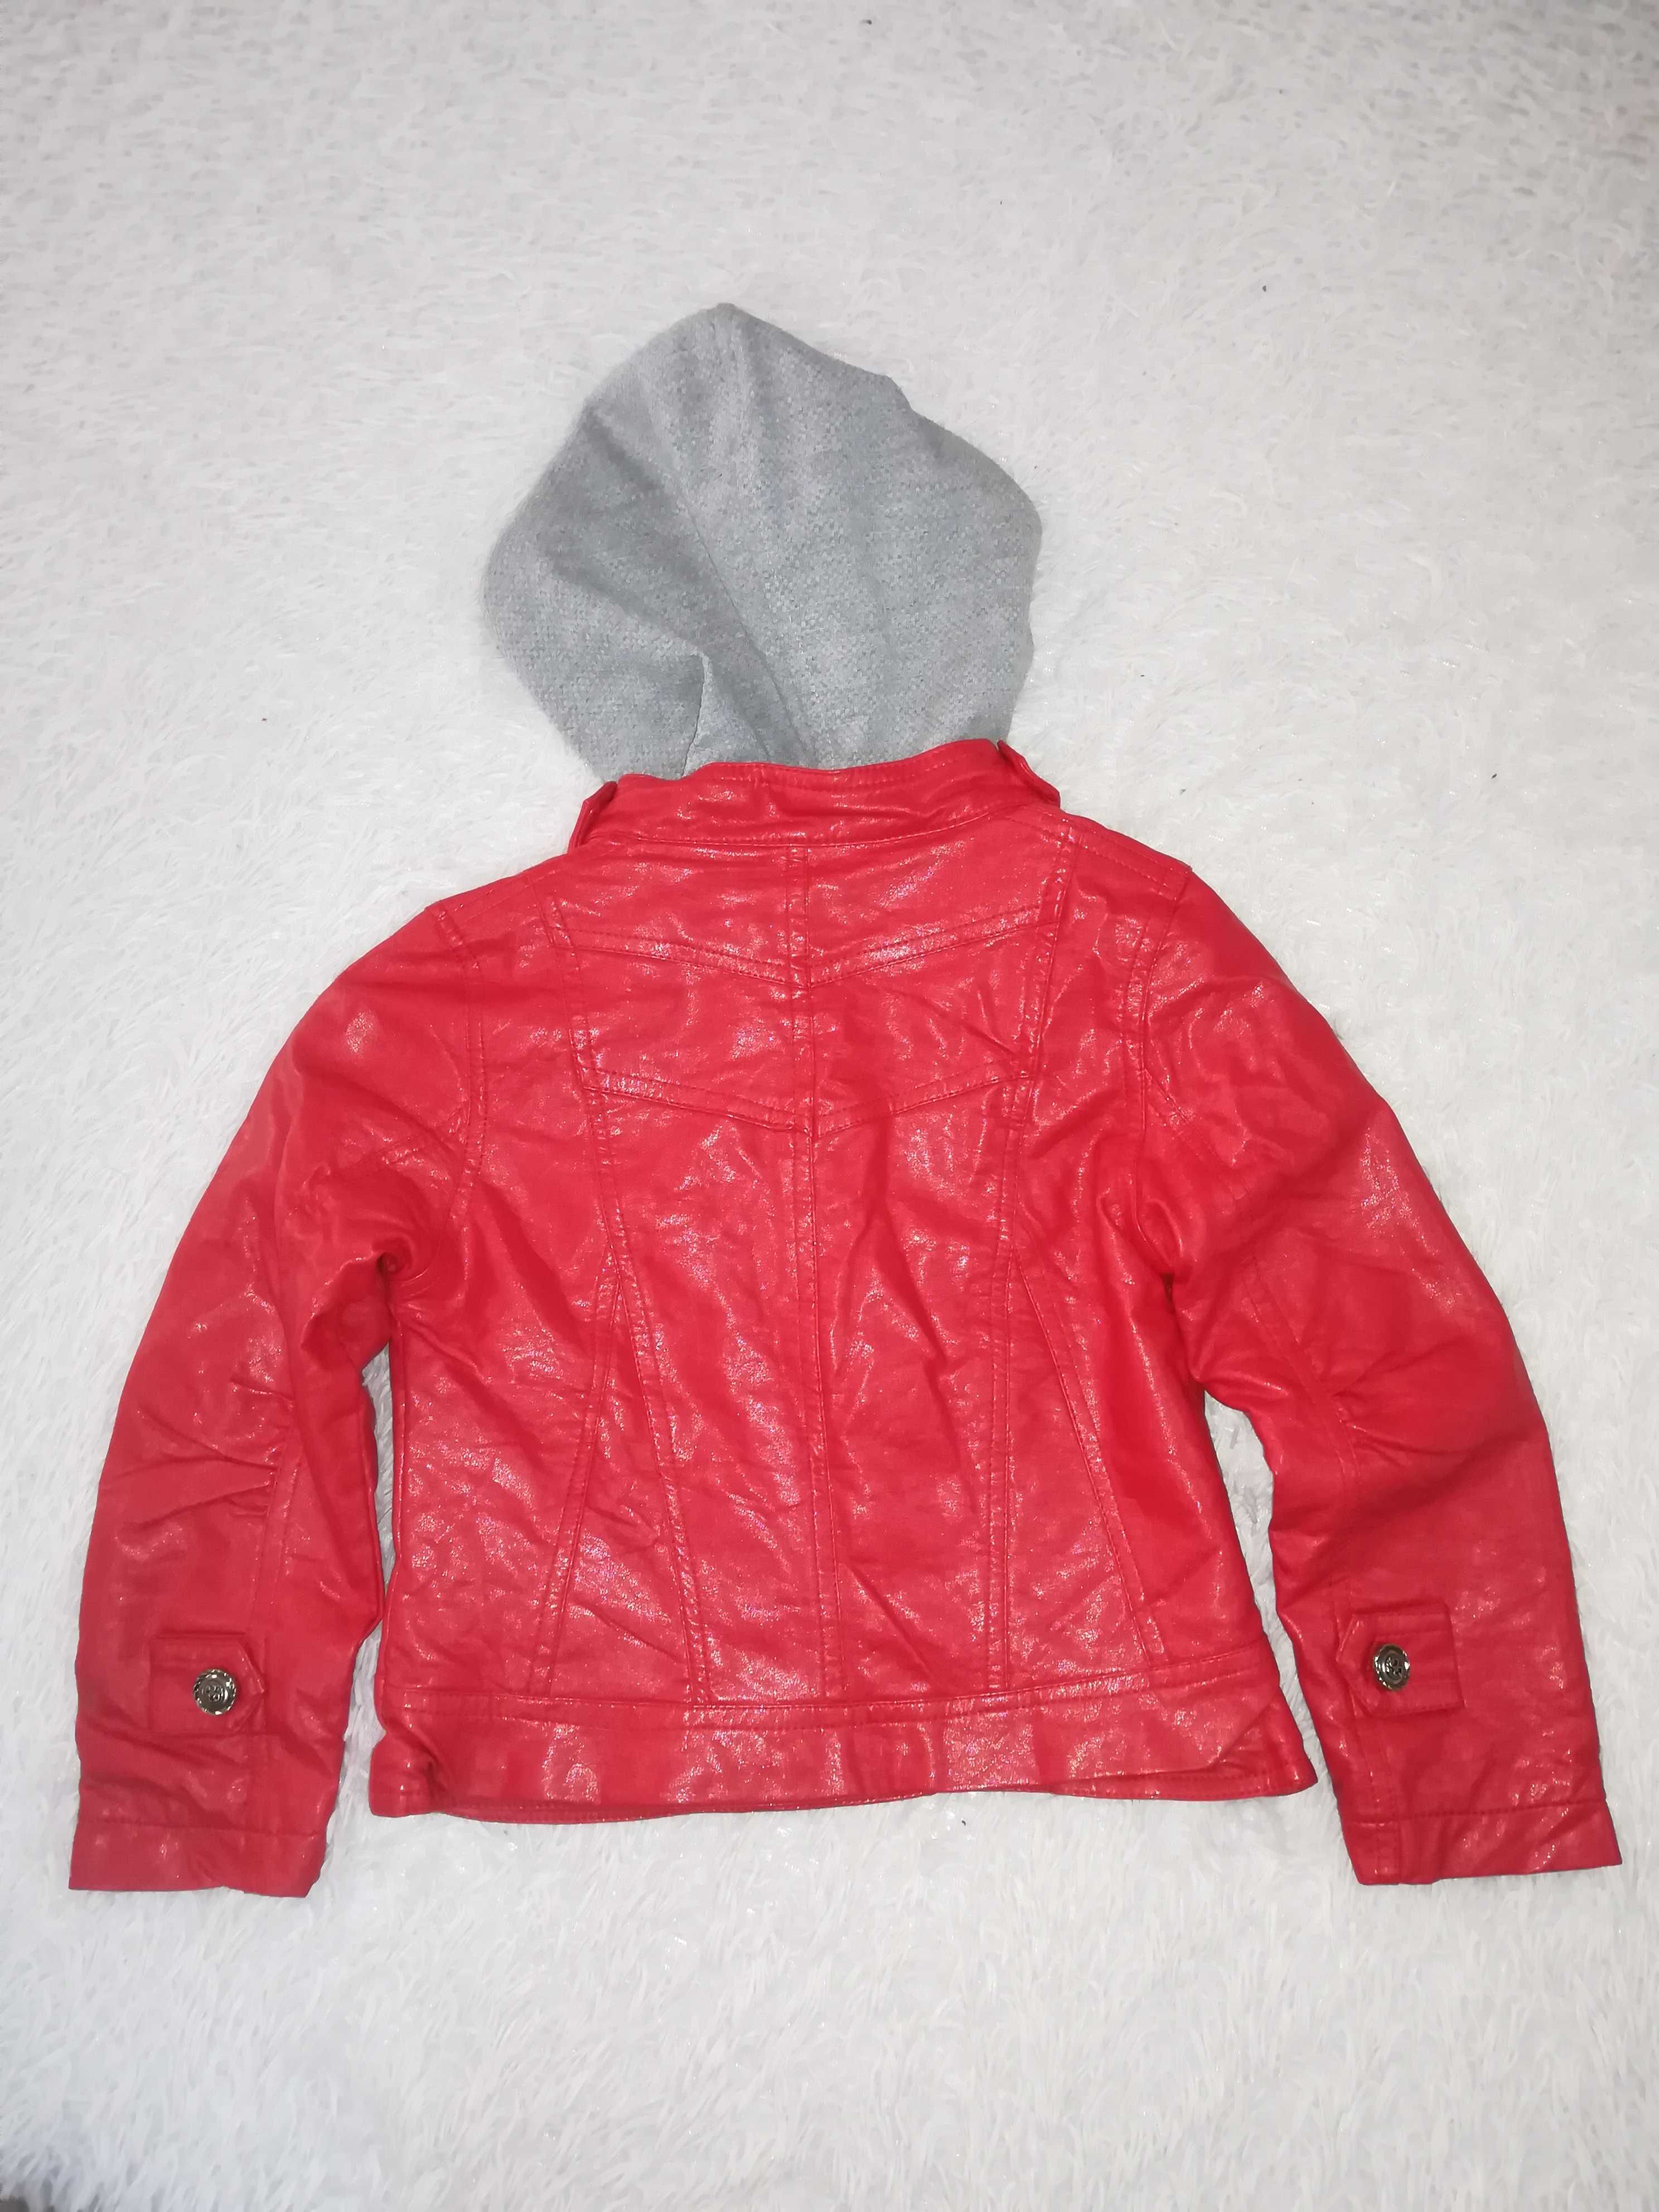 Продам НОВУЮ куртку, размер 130, ткань кожгалантерея, цена 5000 тенге